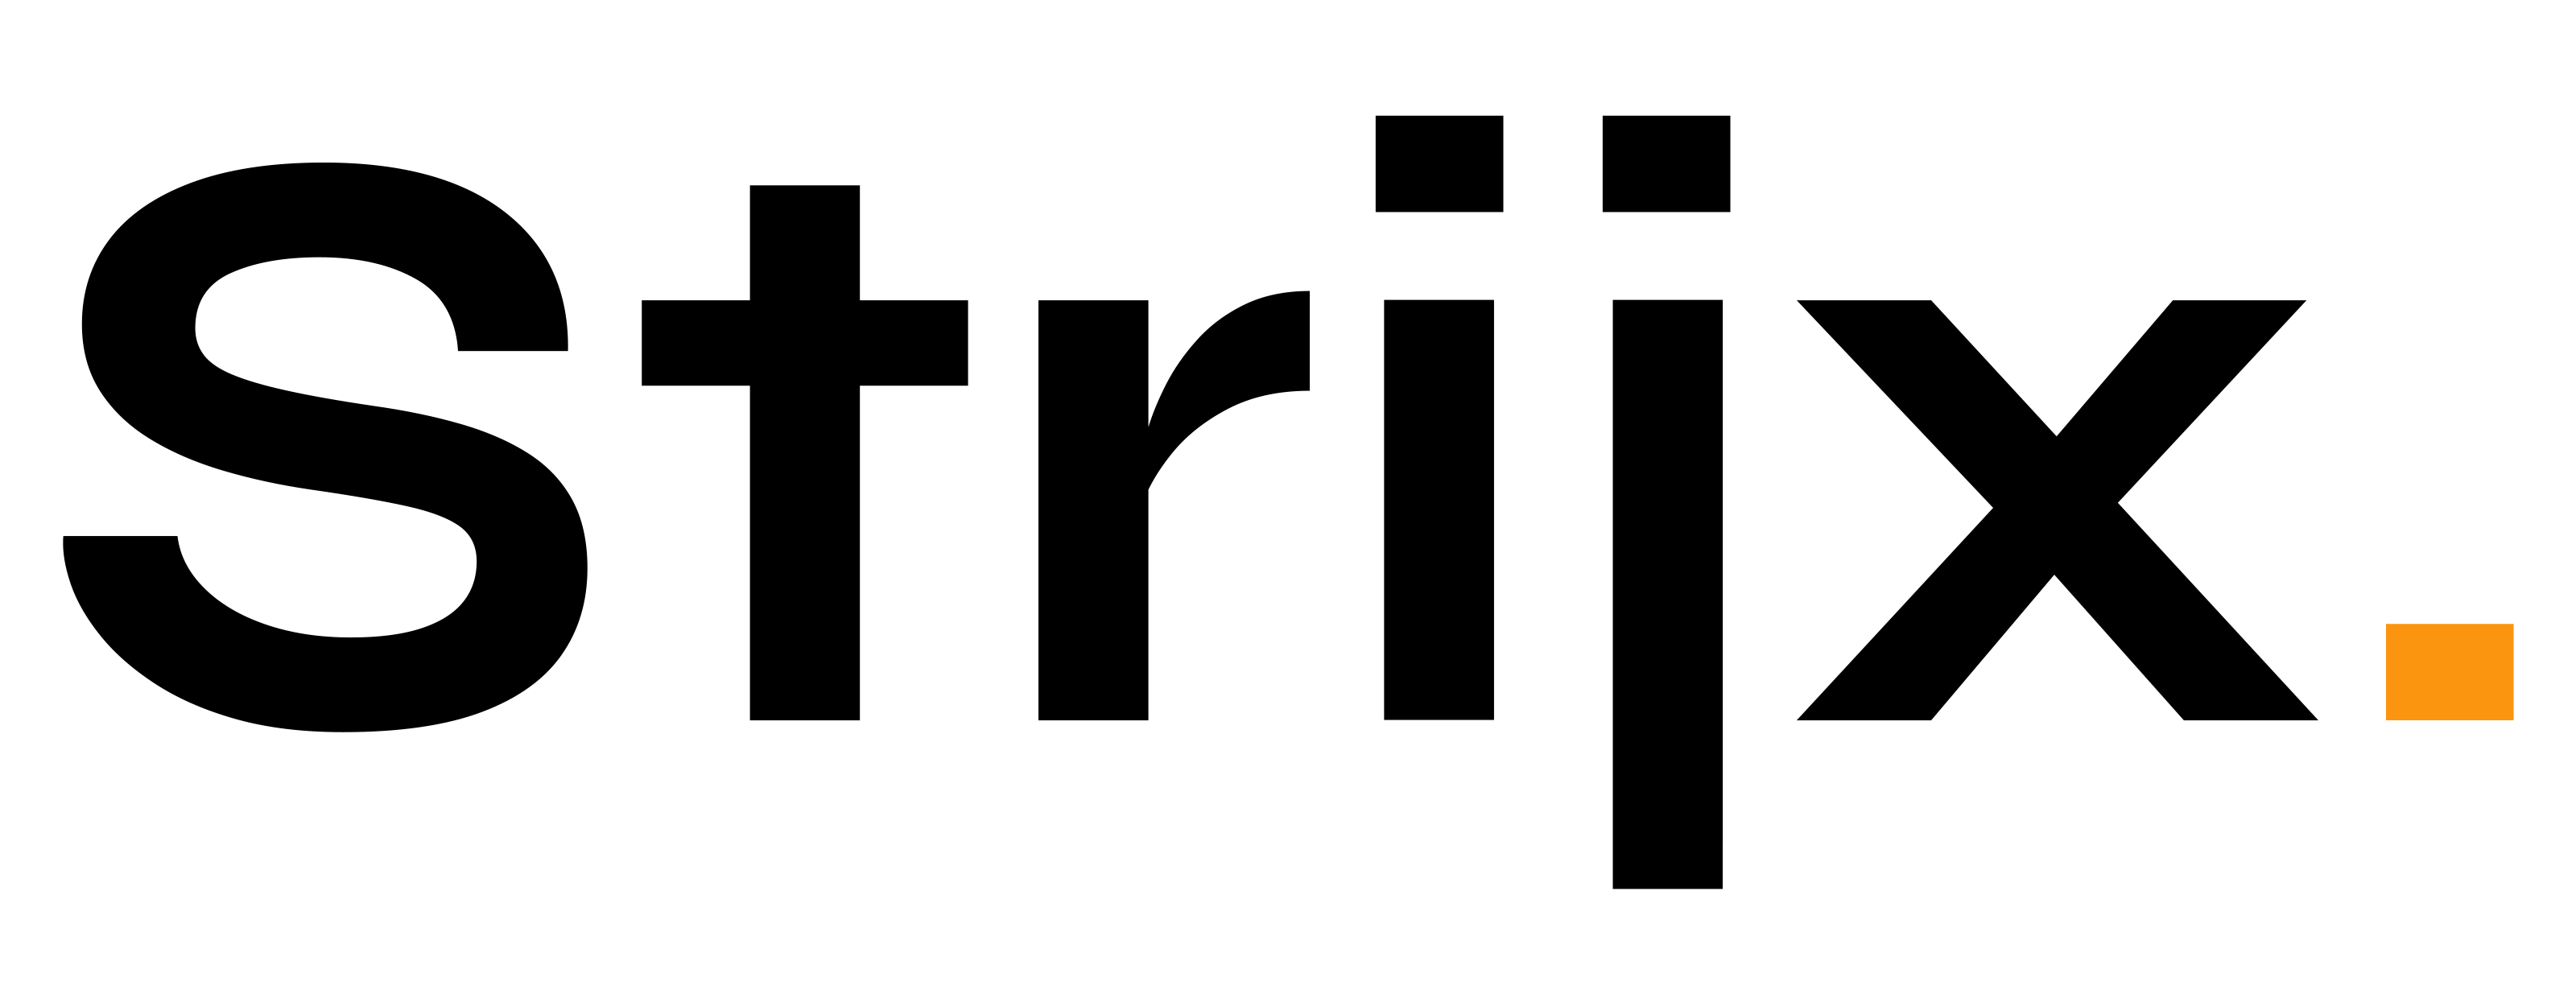 hevin-logo